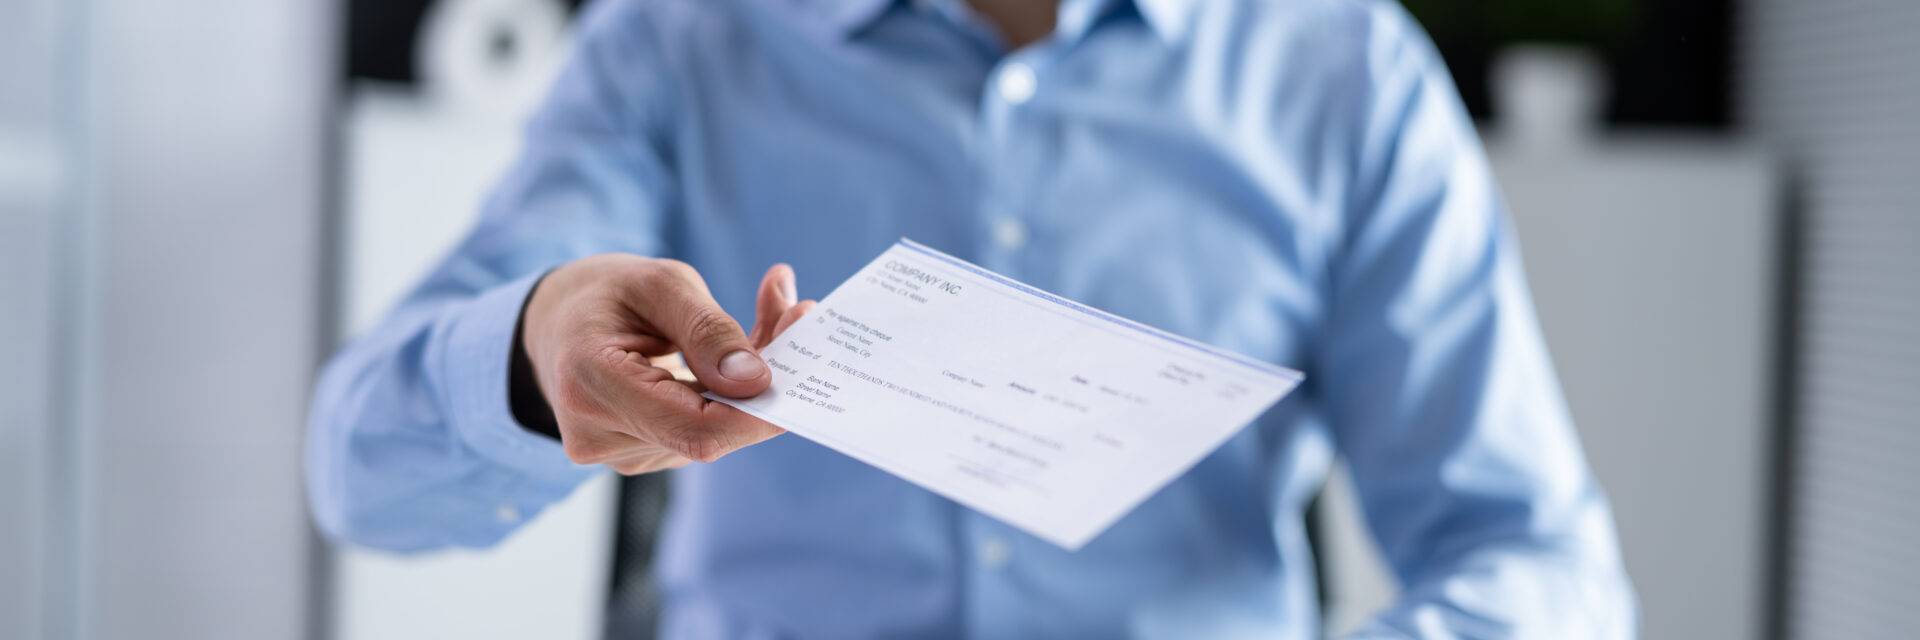 tenancy deposit uncashed cheque